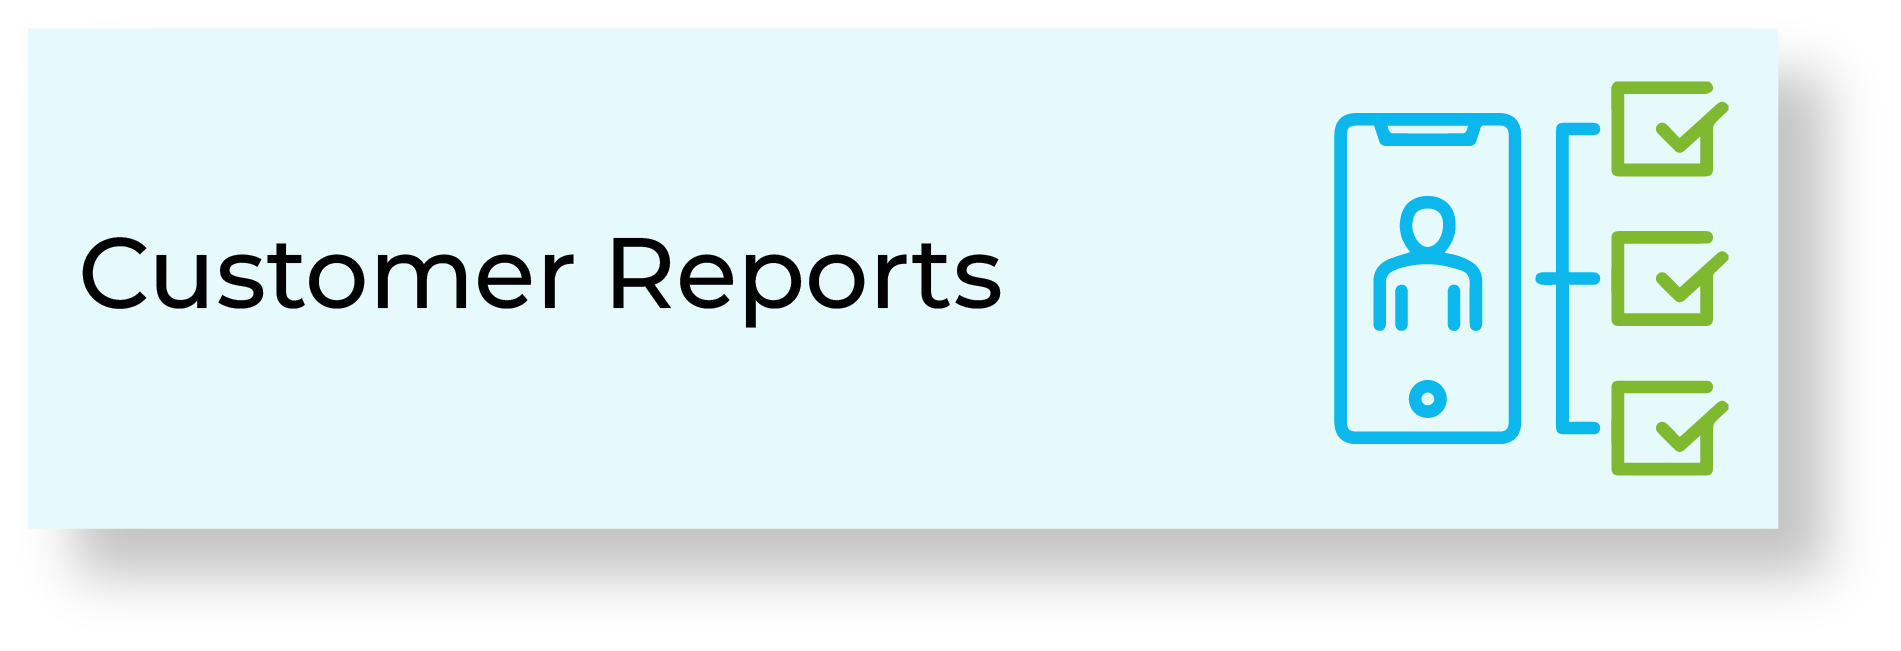 Customer Reports